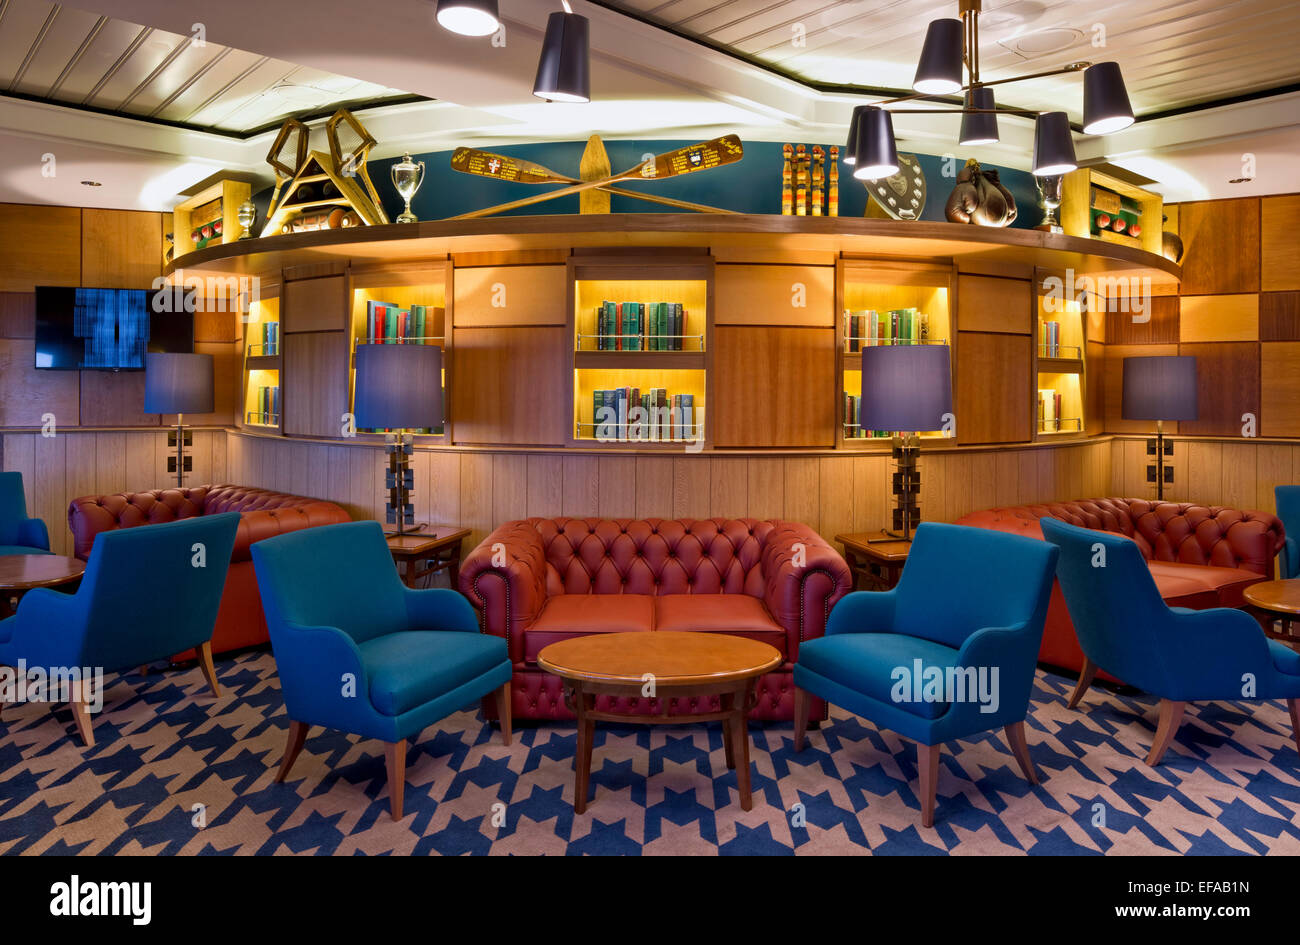 P & O Cruise Ship Interiors, Southampton, Vereinigtes Königreich. Architekt: SMC Design, 2014. Lounge Möbel. Stockfoto